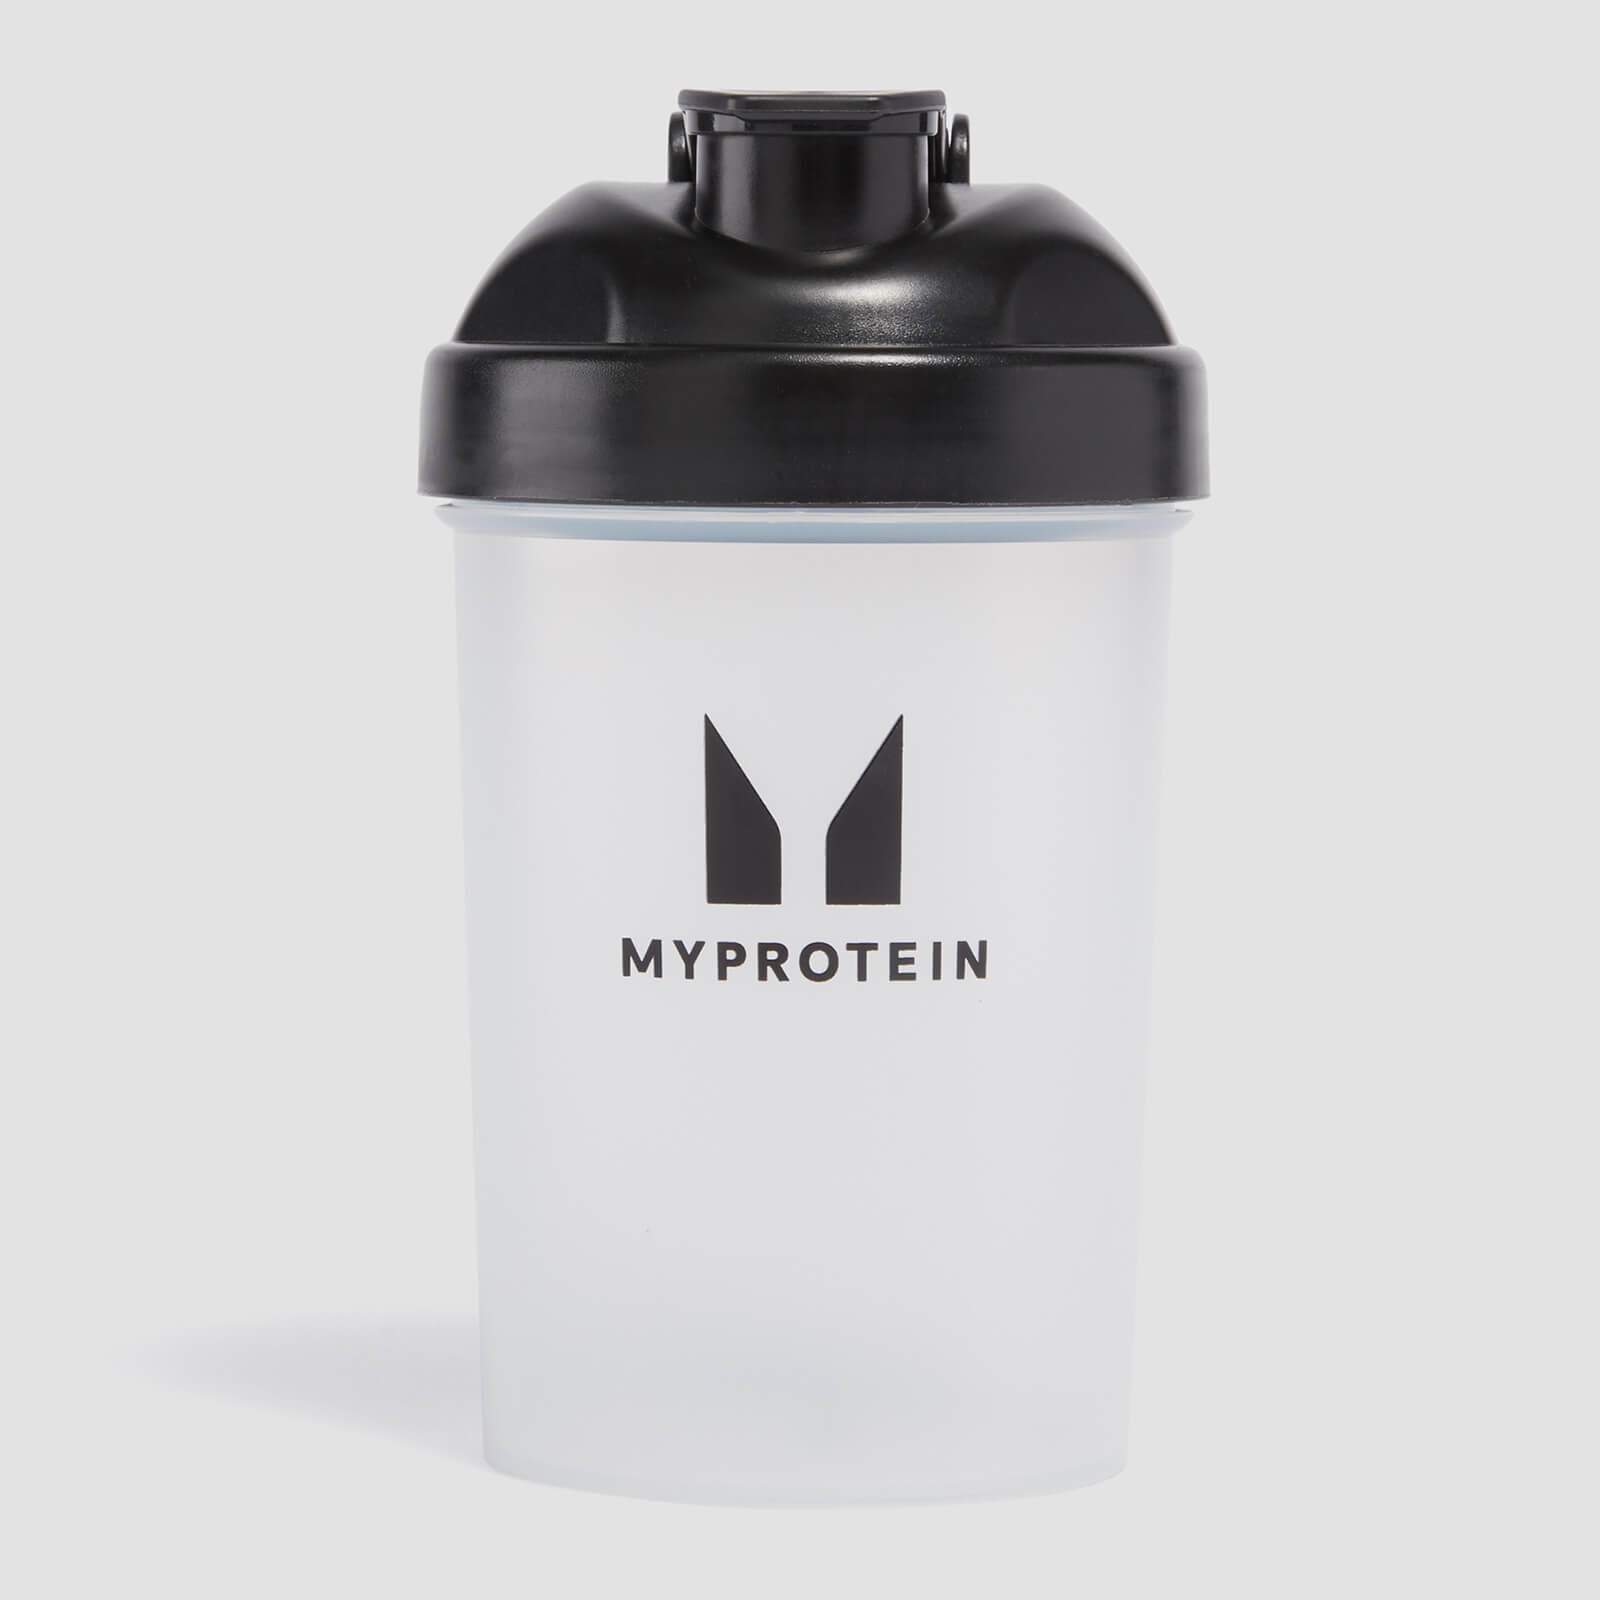 Minishaker Plástico da Myprotein - Transparente/Preto